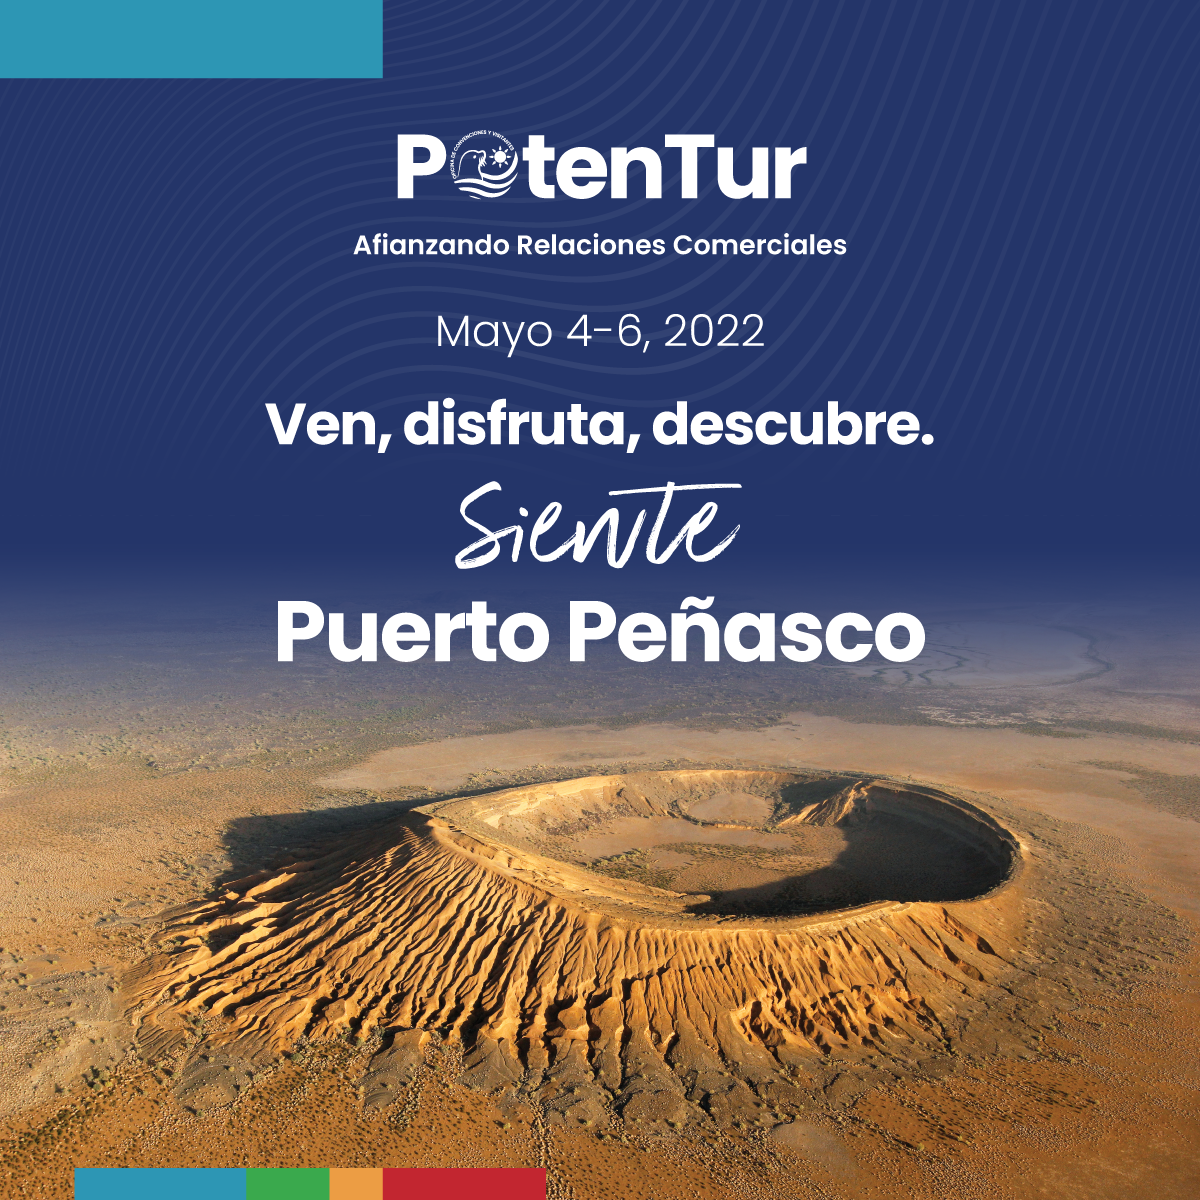 ocv-potentur Puerto Peñasco to host Potentur expo in May